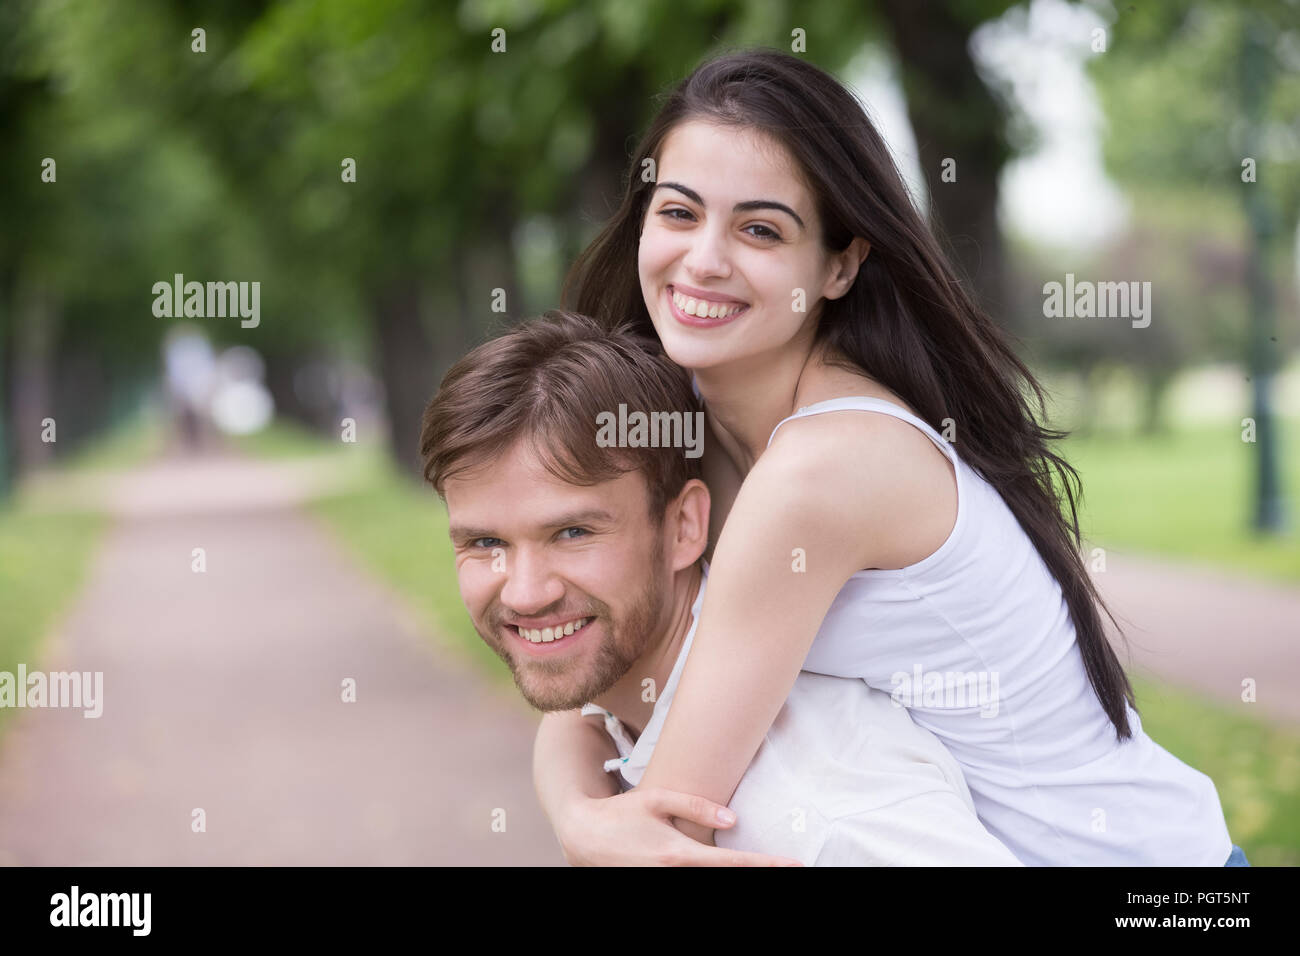 Portrait of smiling young girlfriend piggyback millennial boyfri Stock Photo